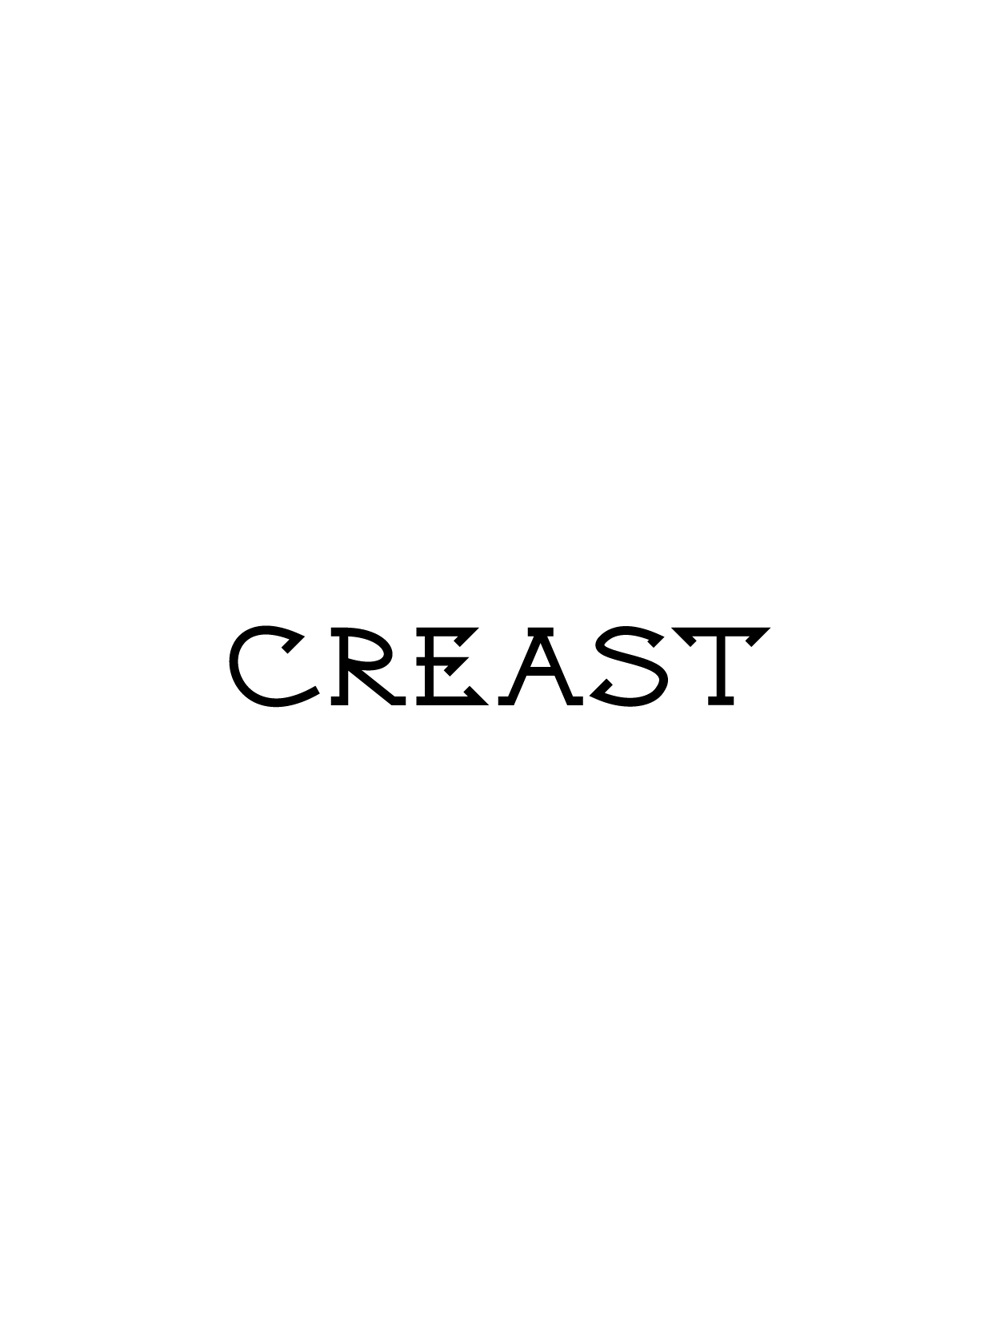 CREAST